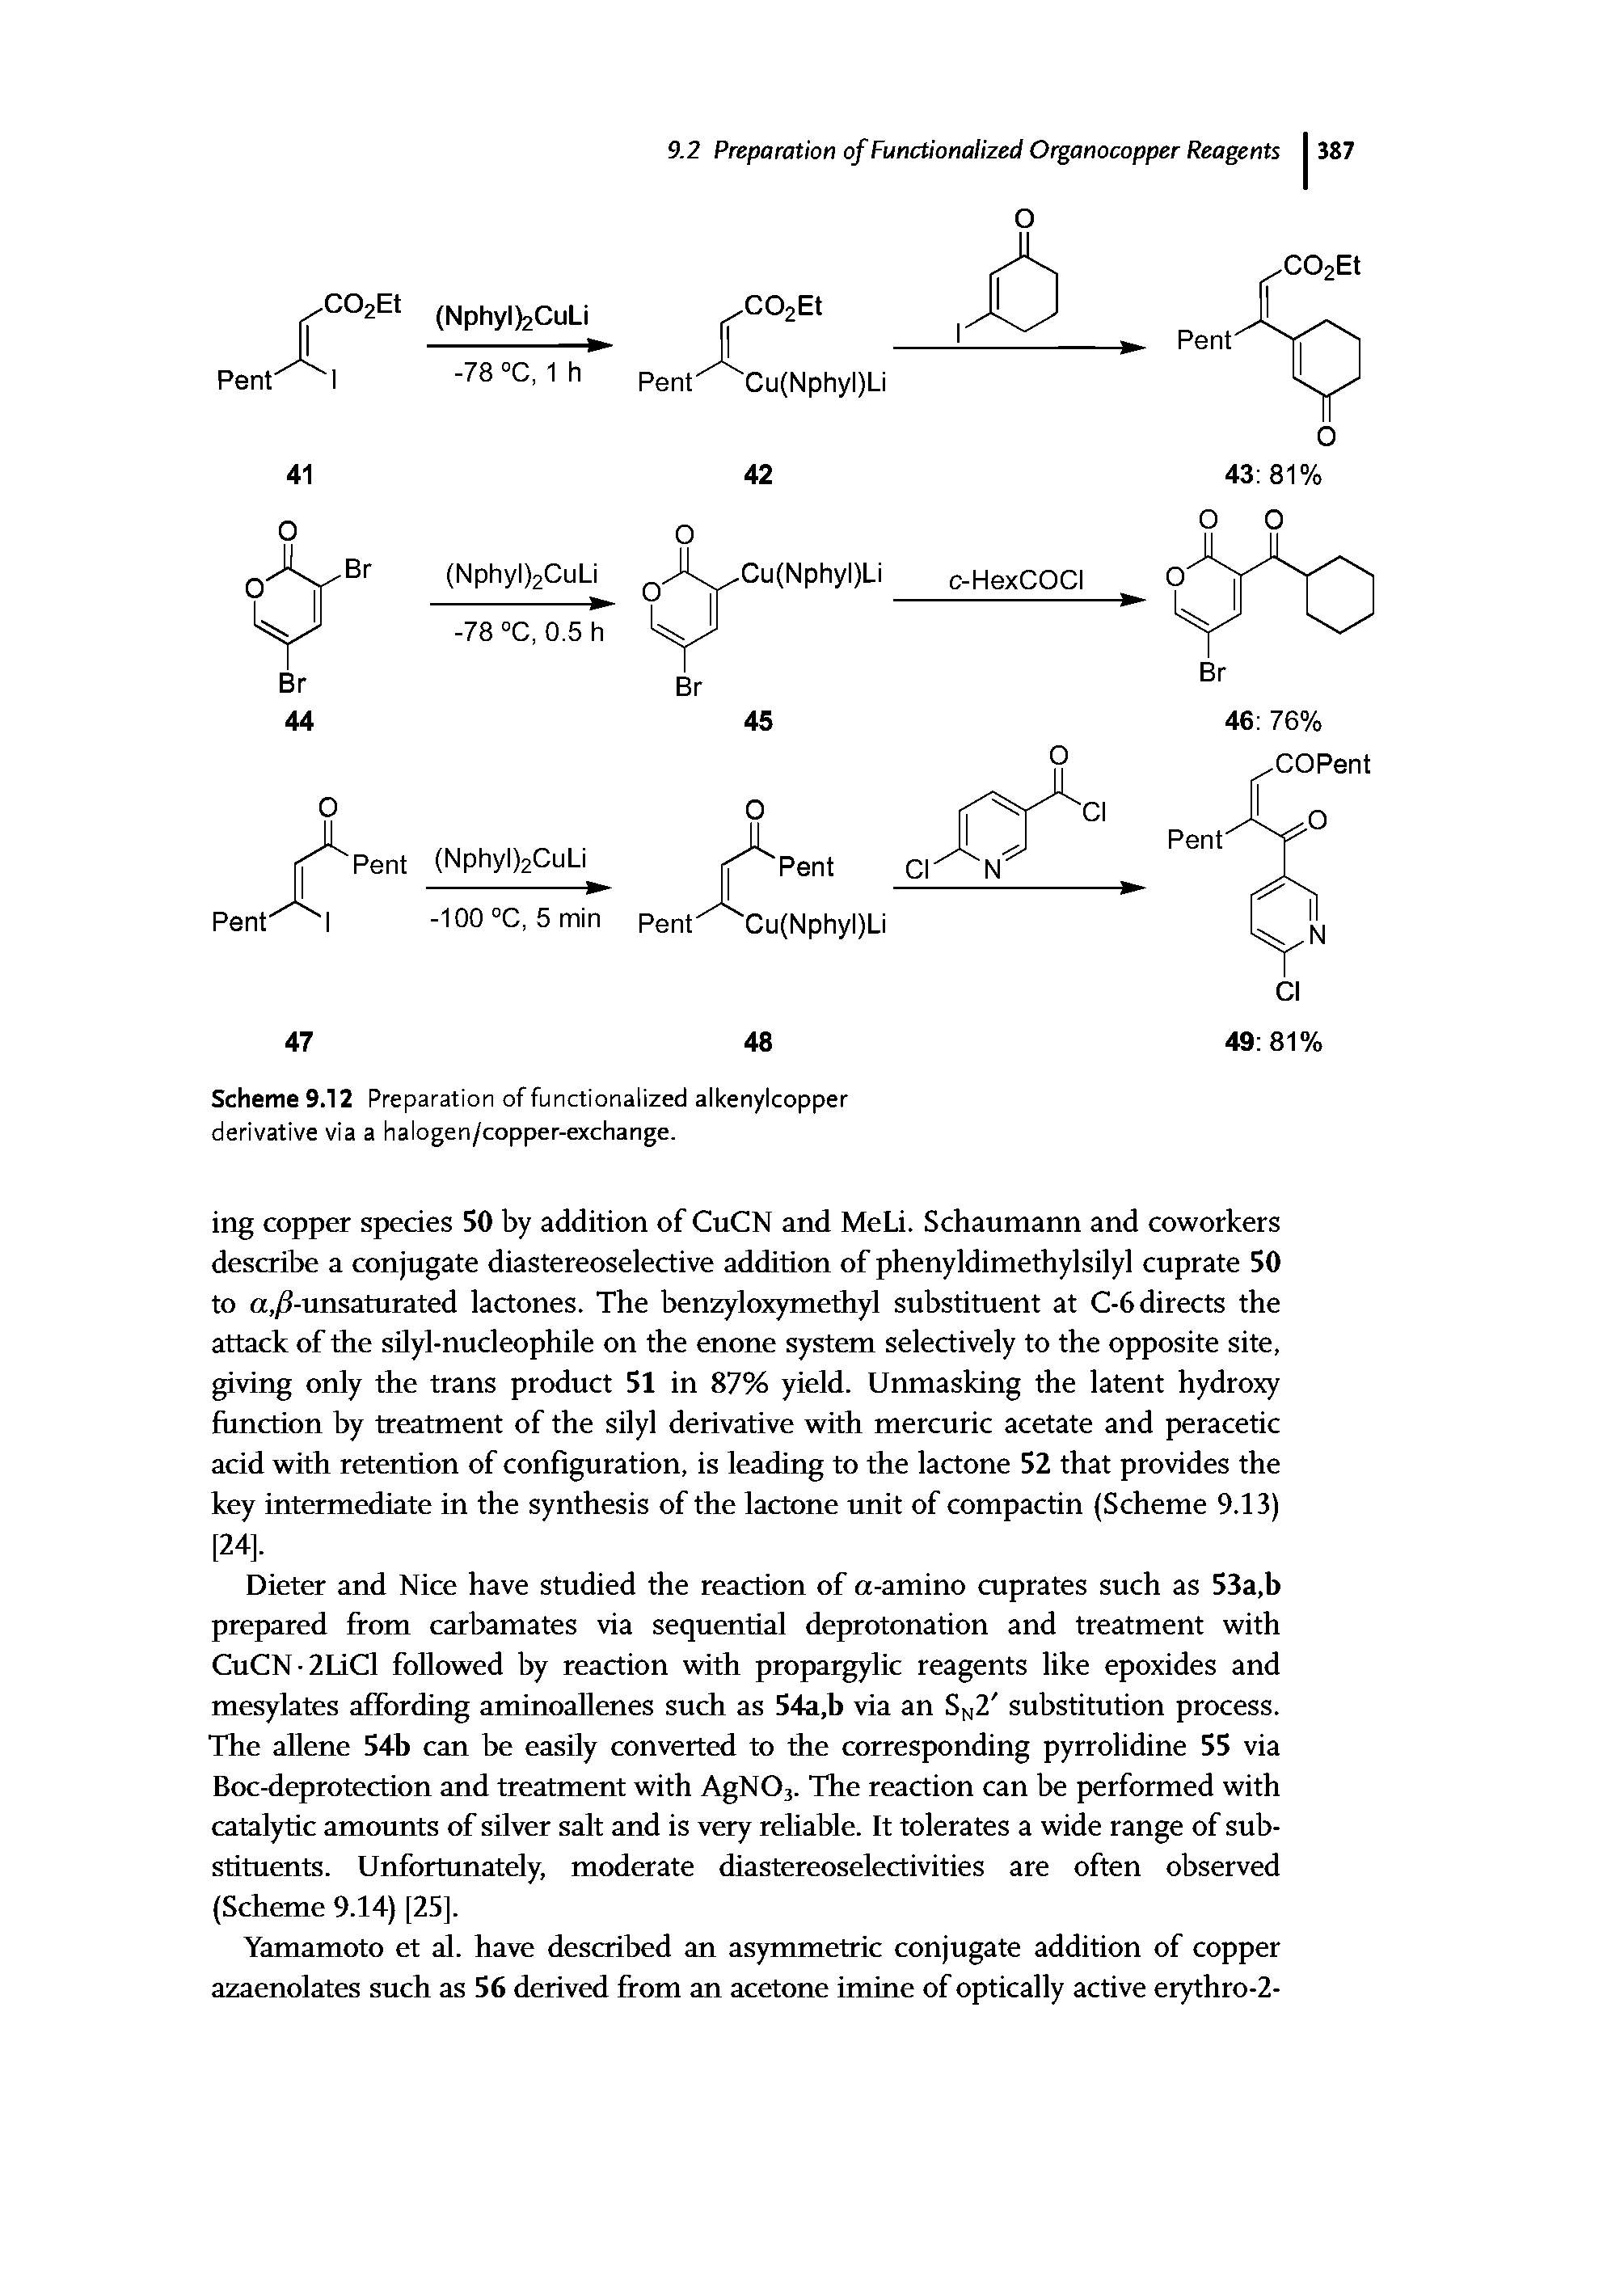 Scheme 9.12 Preparation of functionalized alkenylcopper derivative via a halogen/copper-exchange.